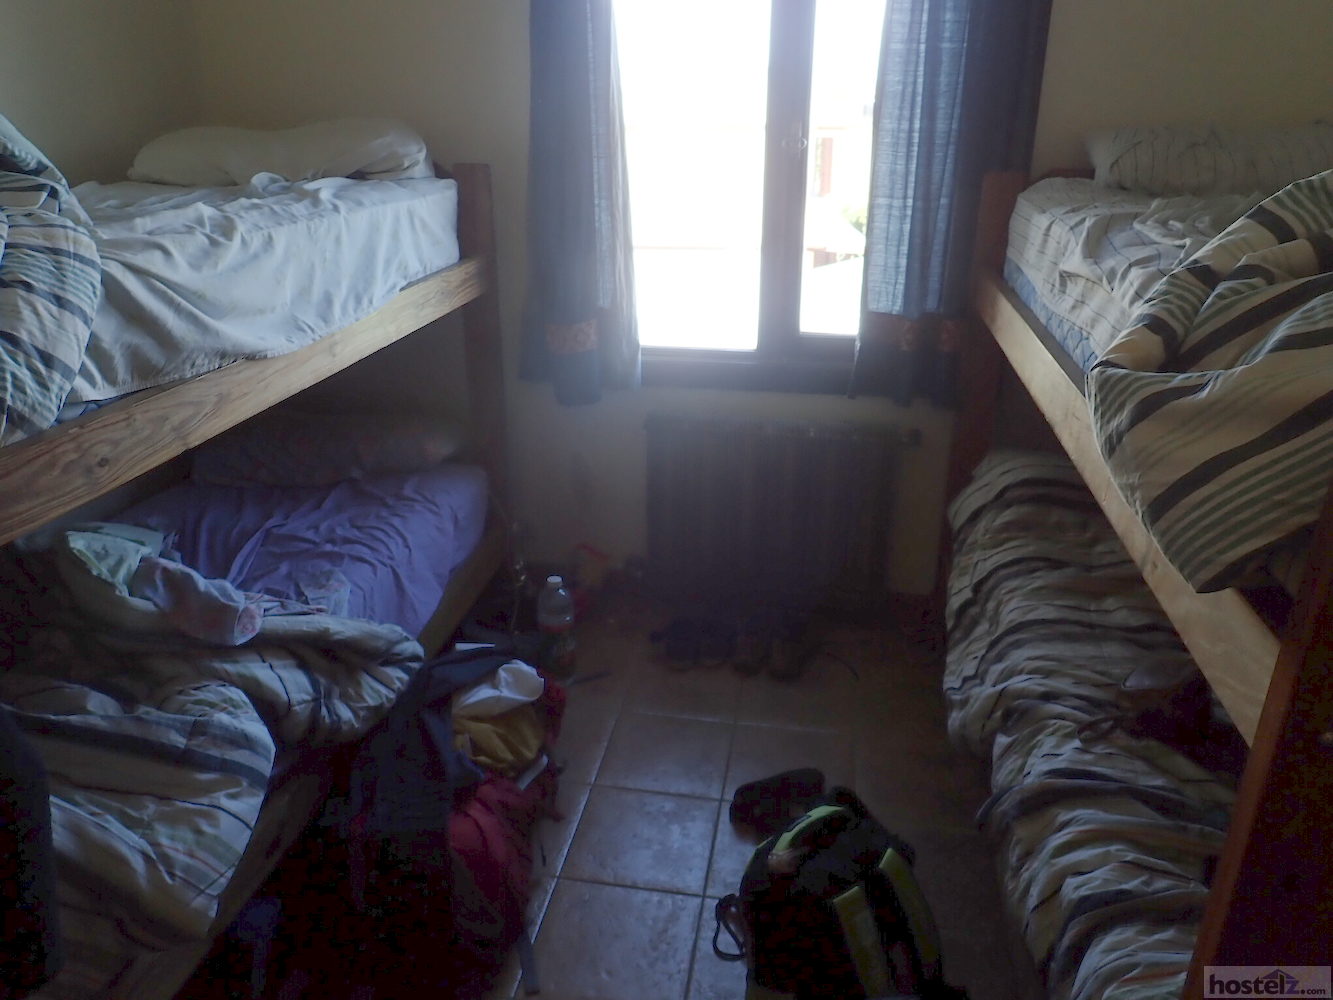 Four-bed dorm